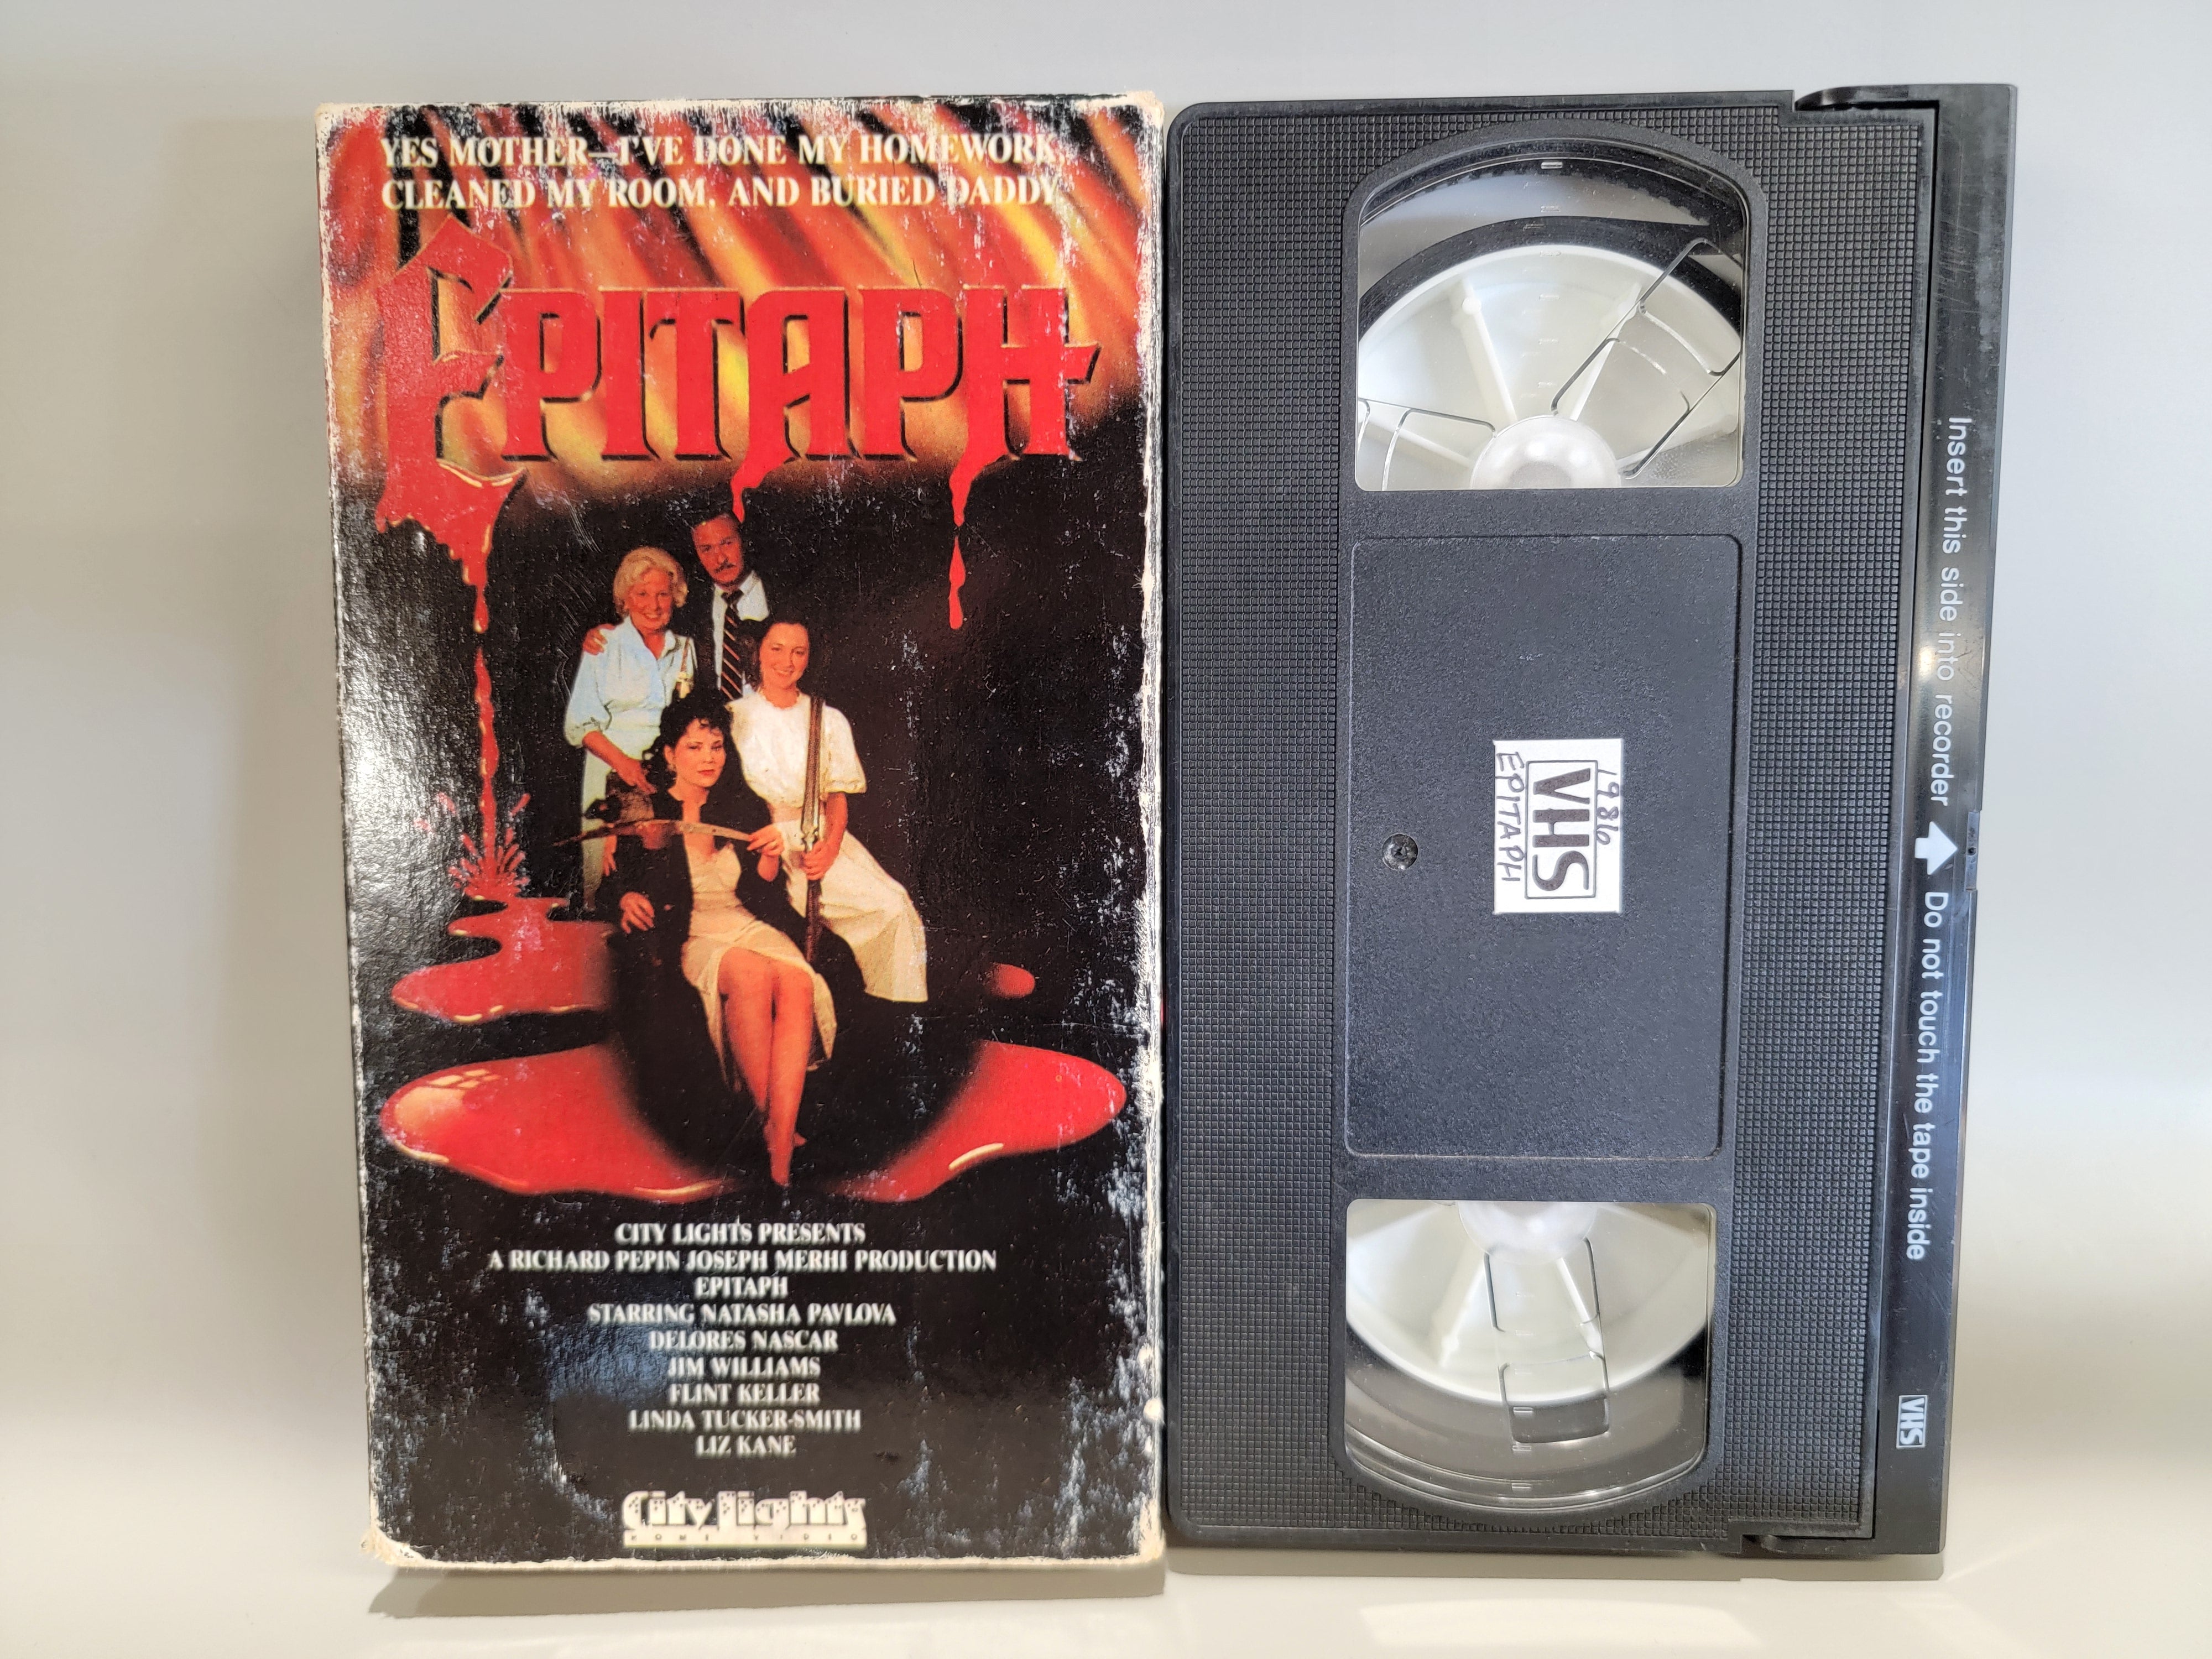 EPITAPH VHS [USED]